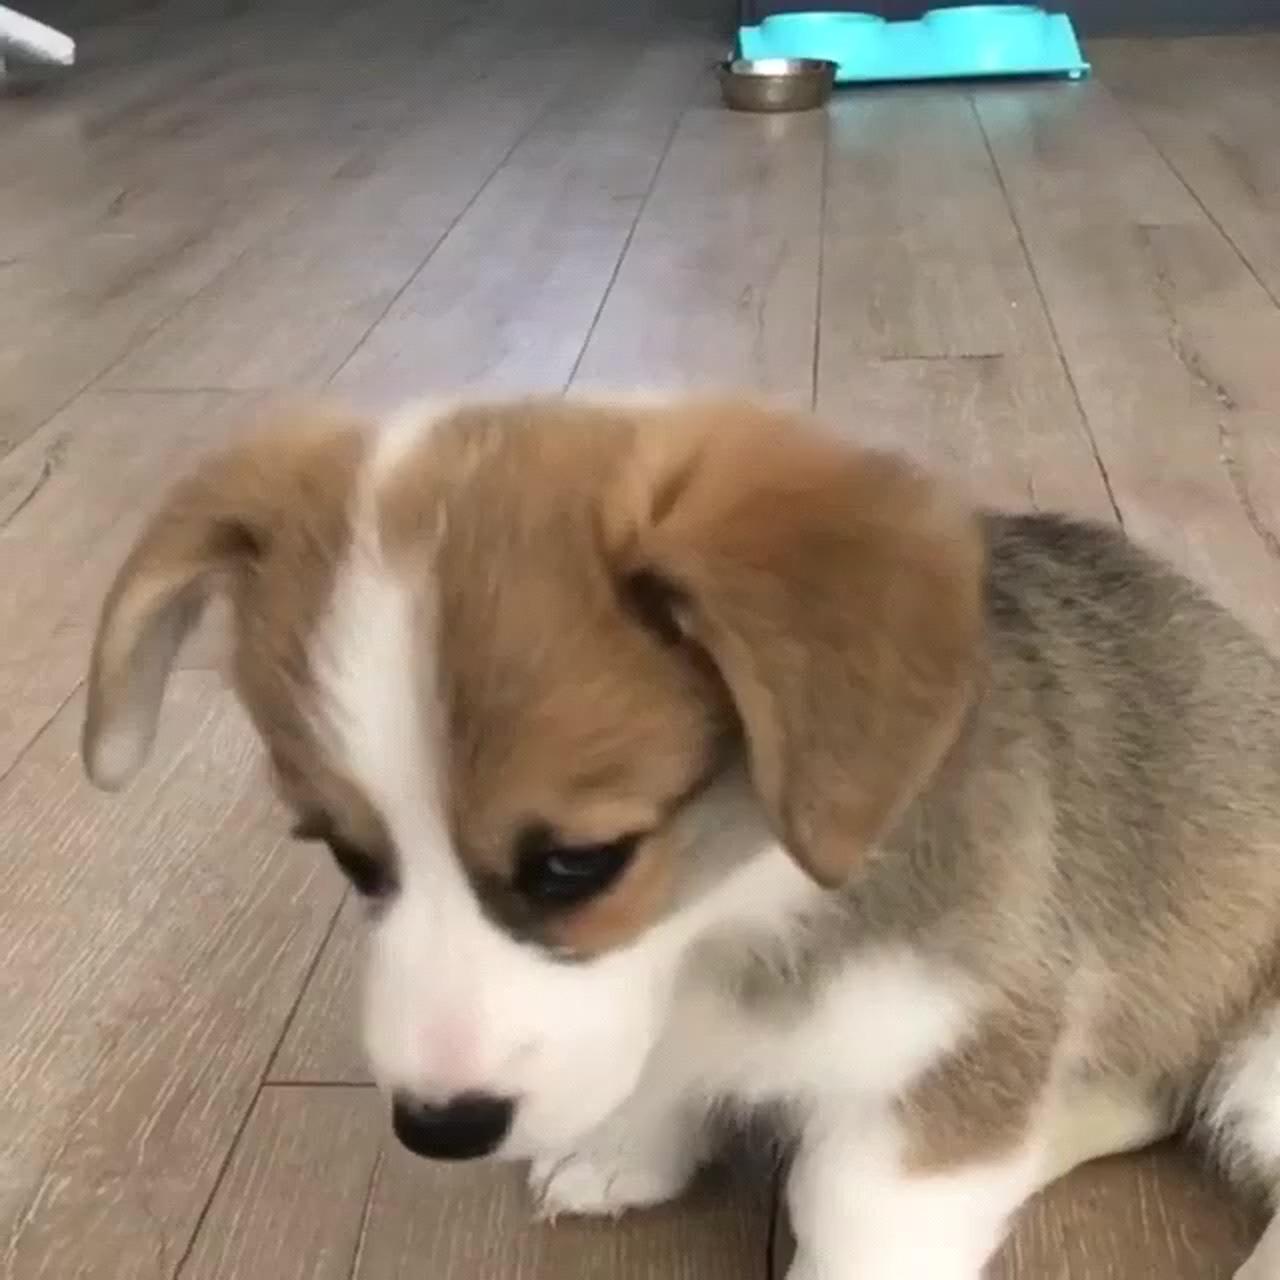 Her nose looks like a heart | beagle family